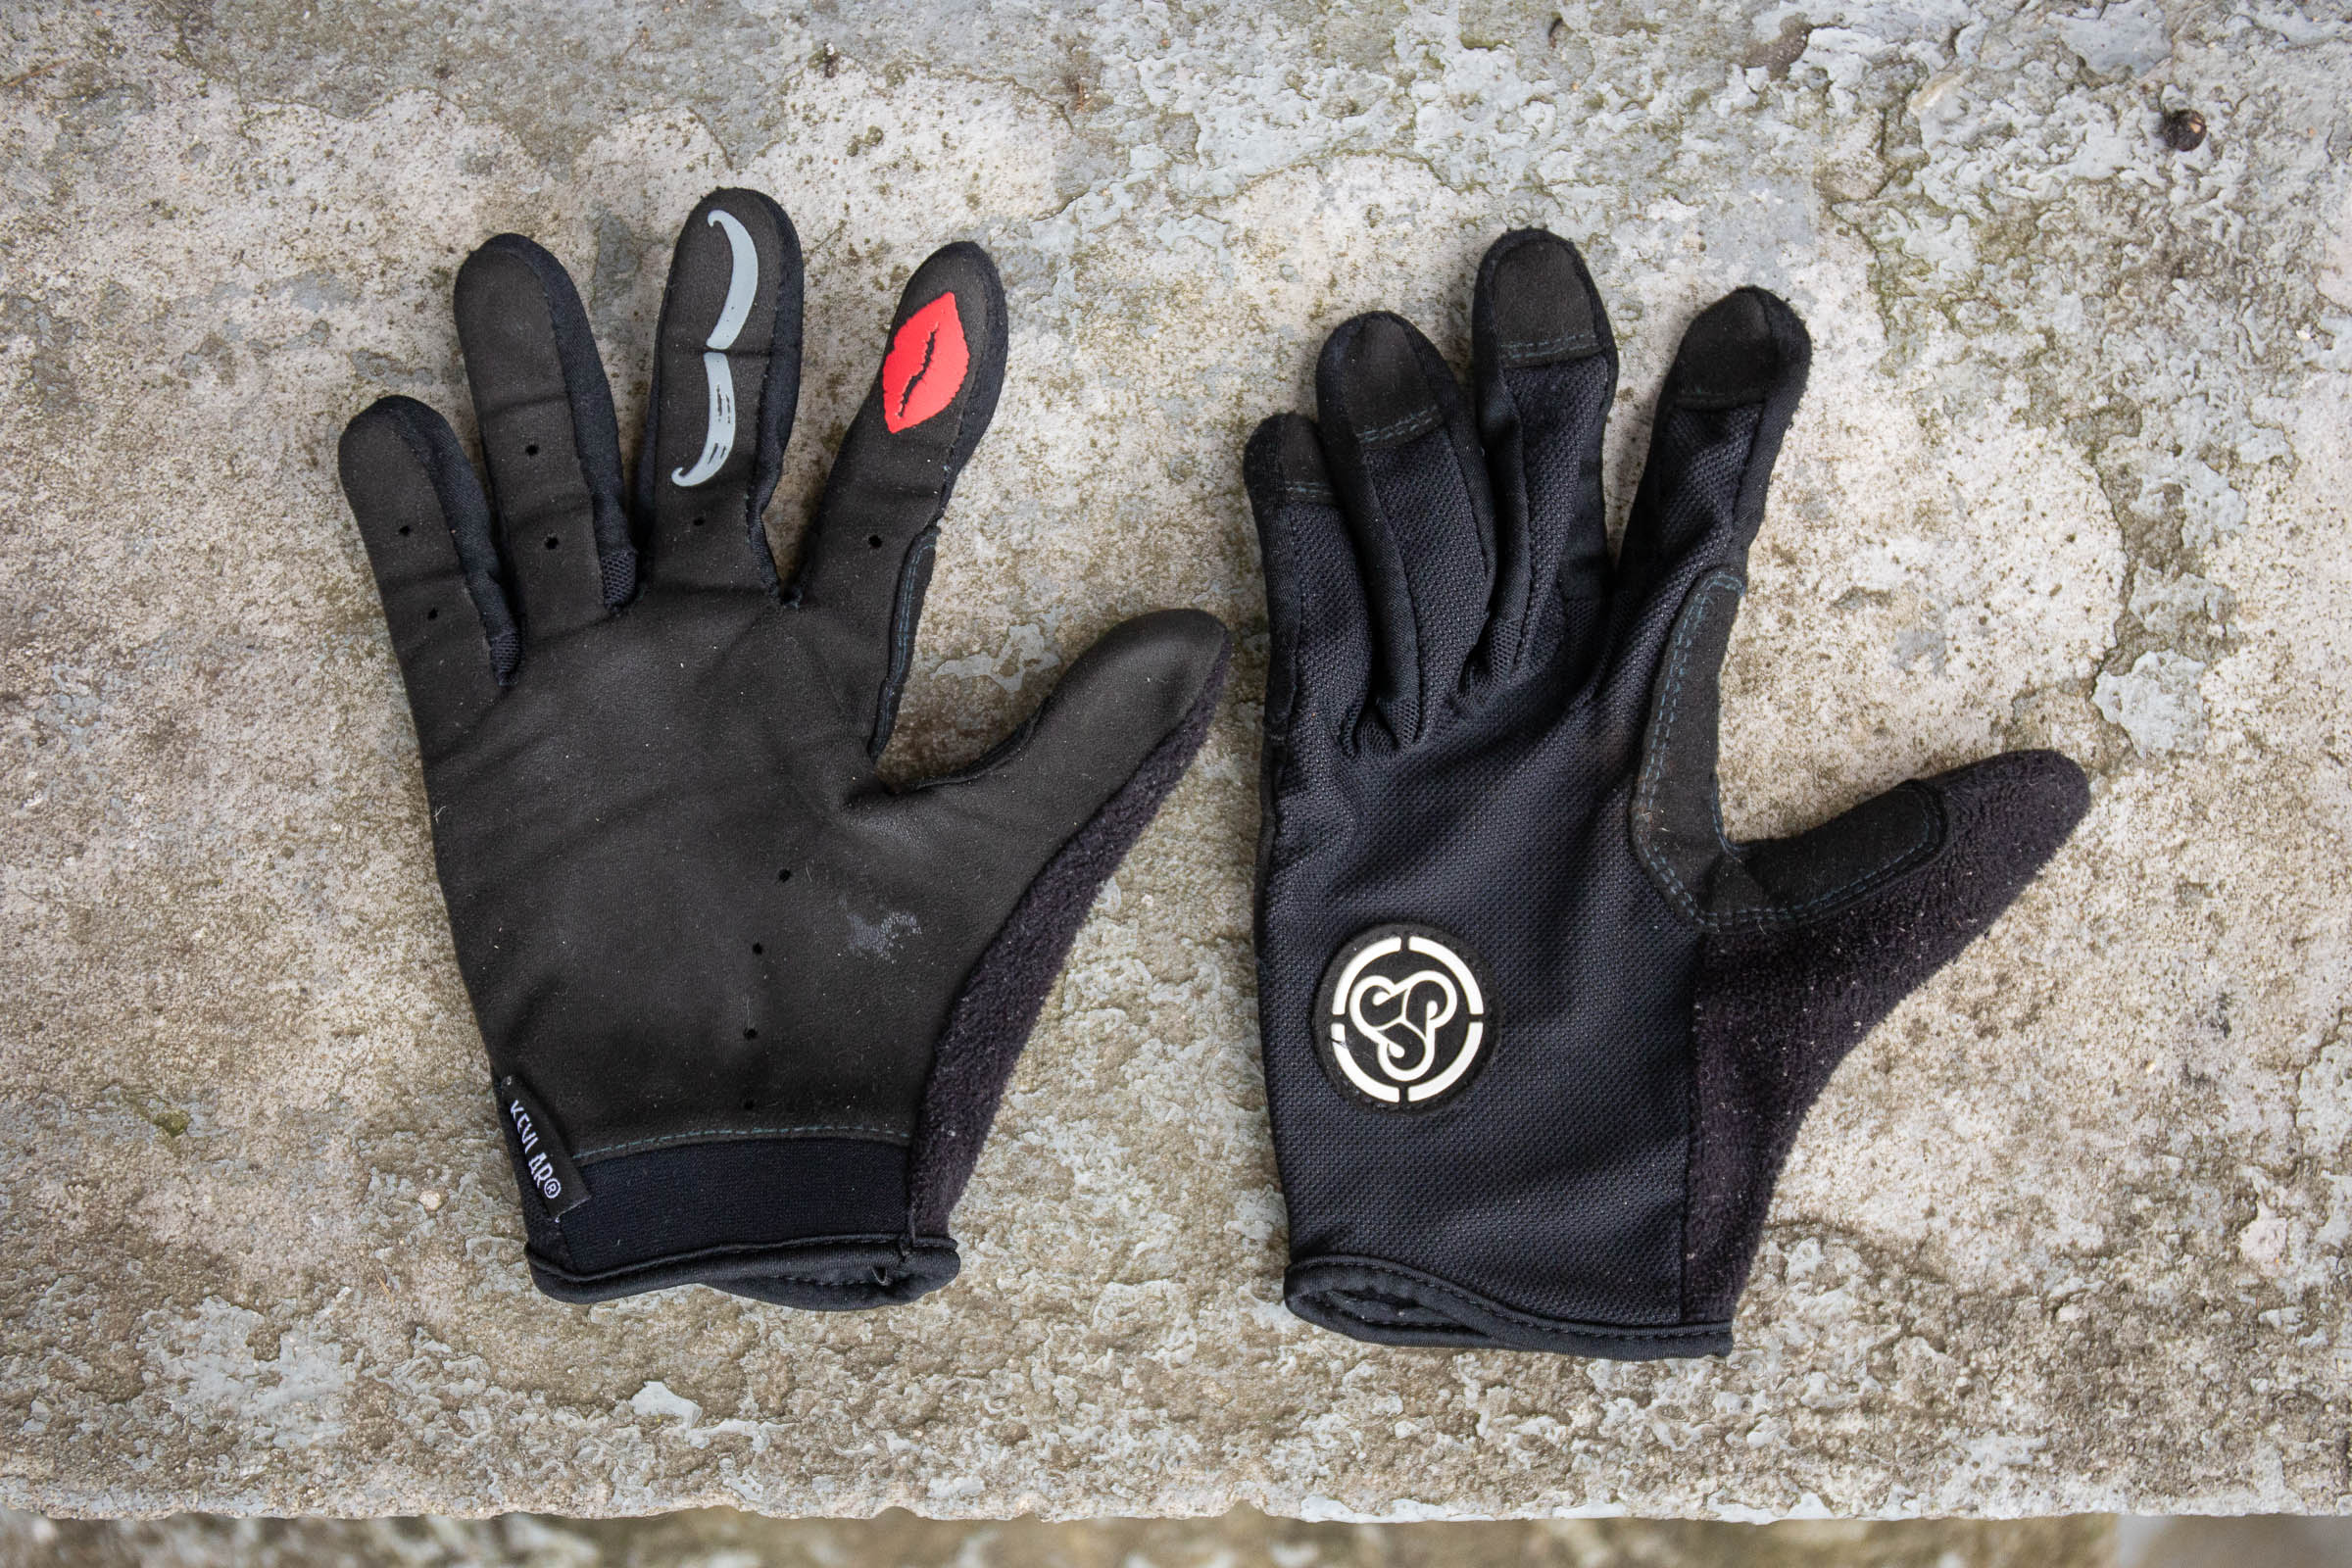 Goods Cycling Gloves Full Finger Mittens Riding Equipment Road Bike Gloves